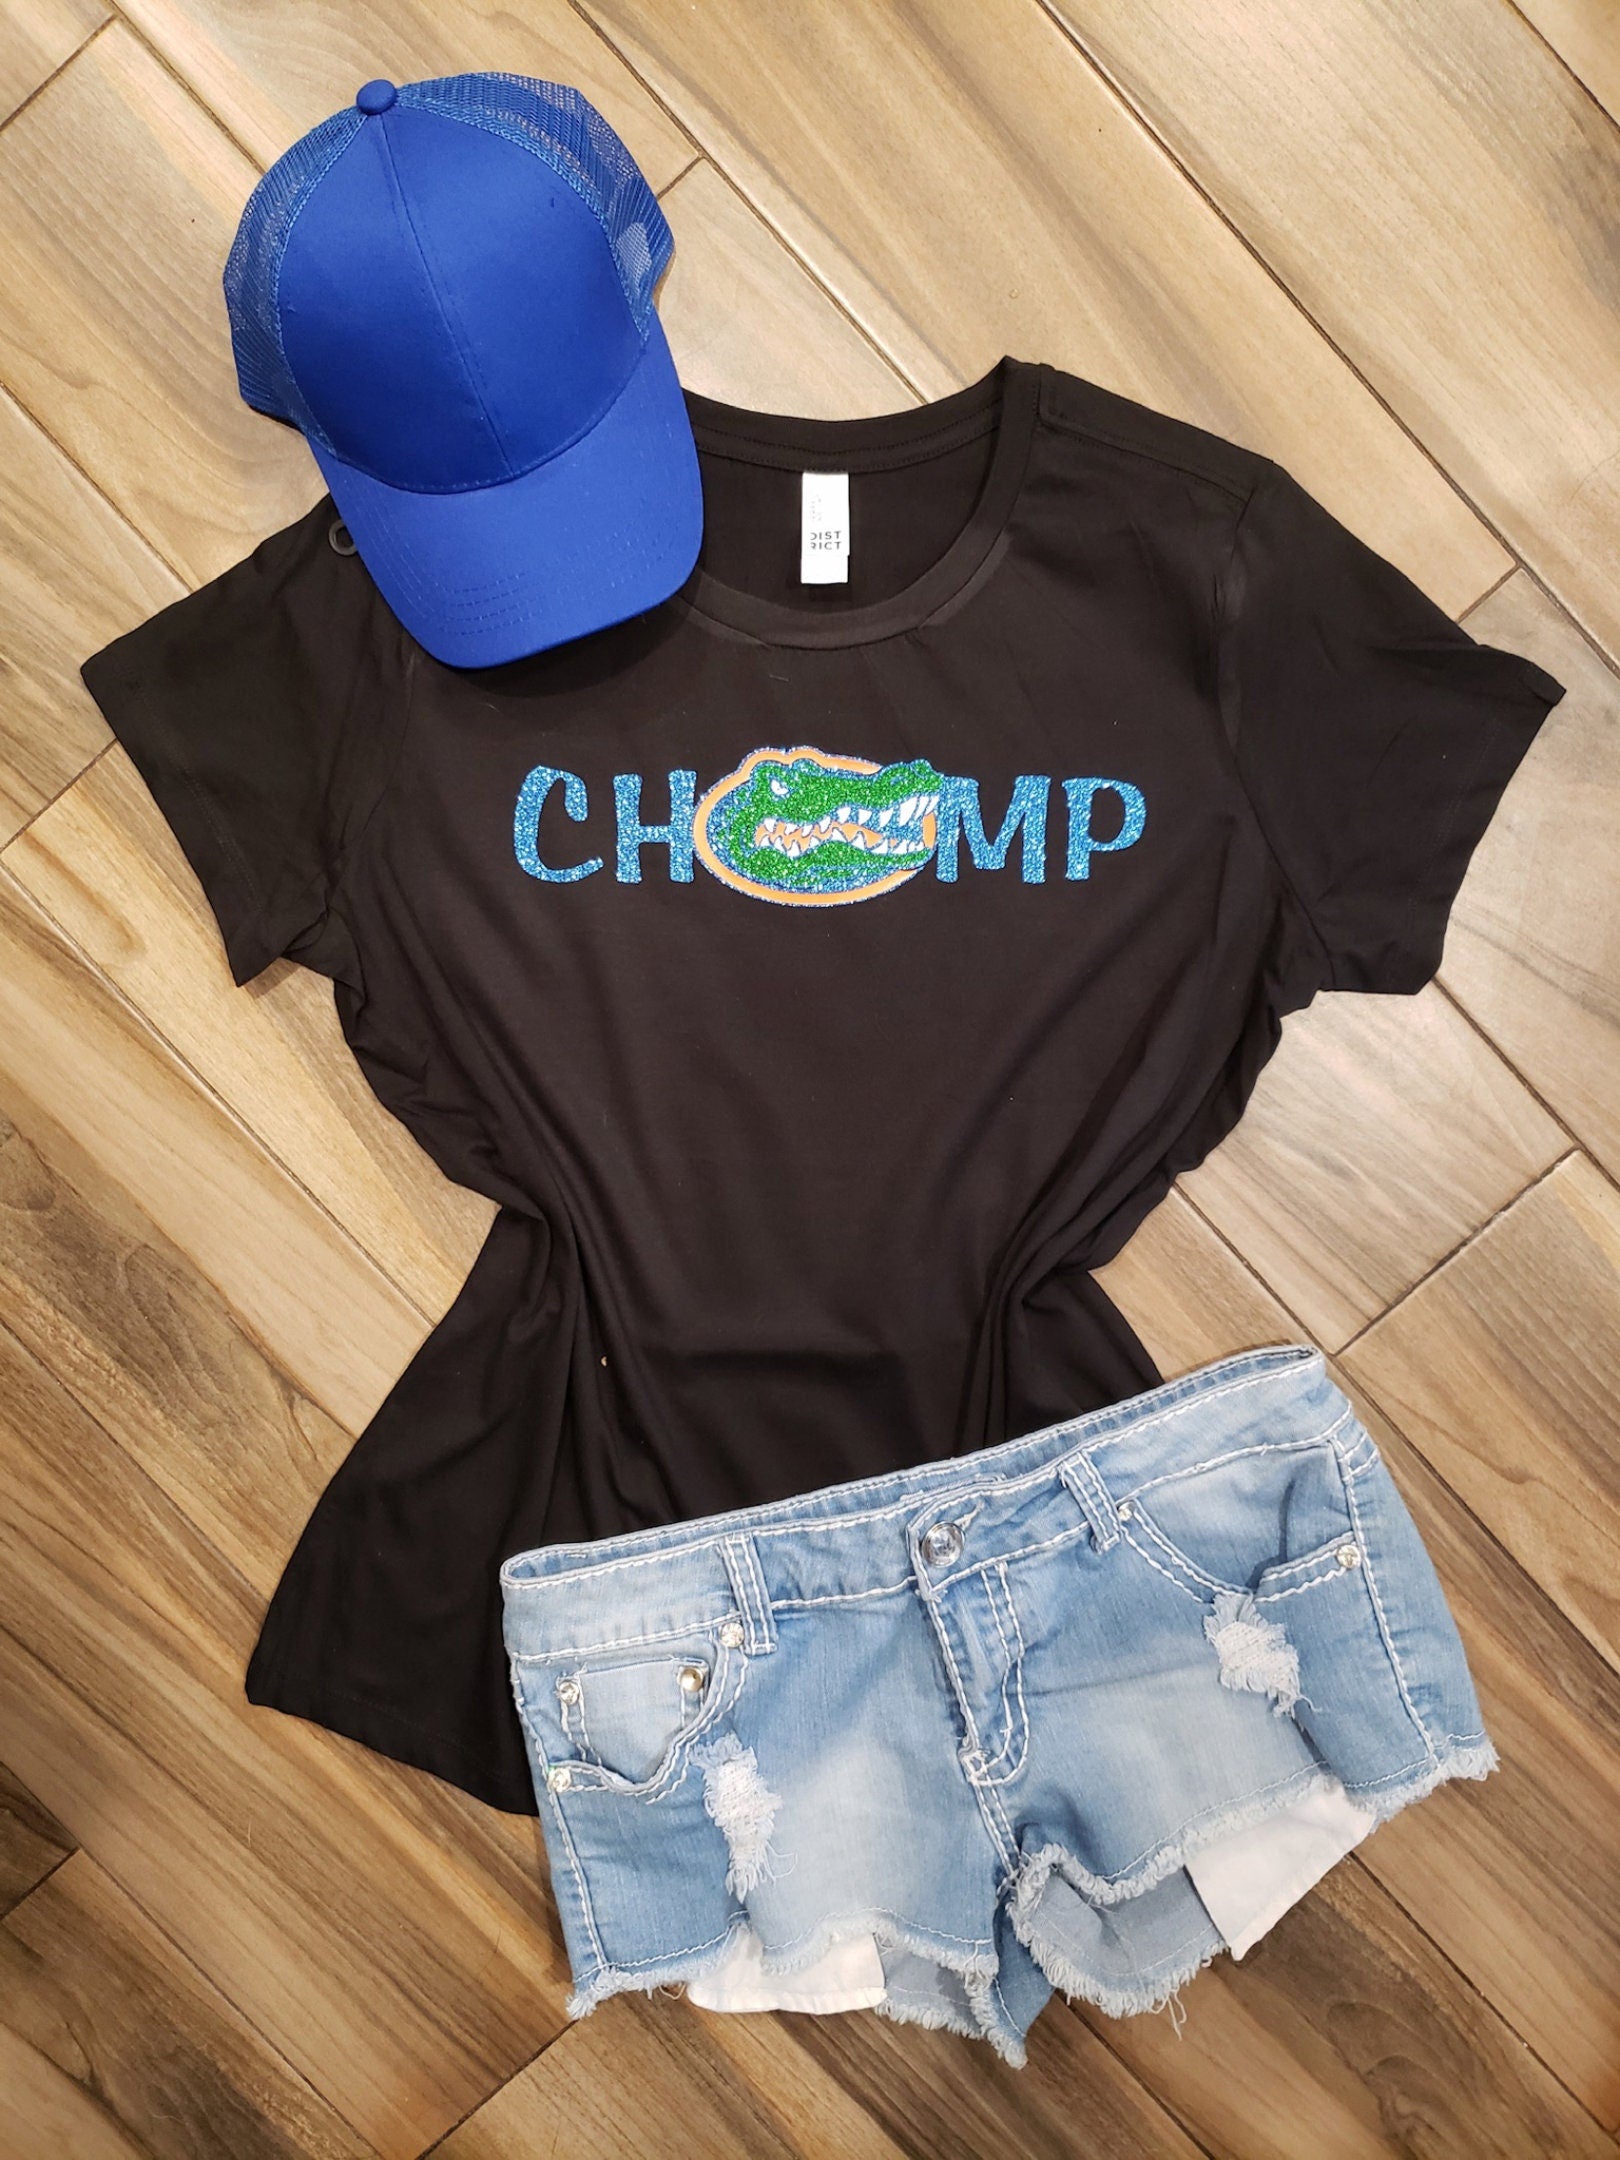 Florida Gators Chomp Glitter Shirt - Black